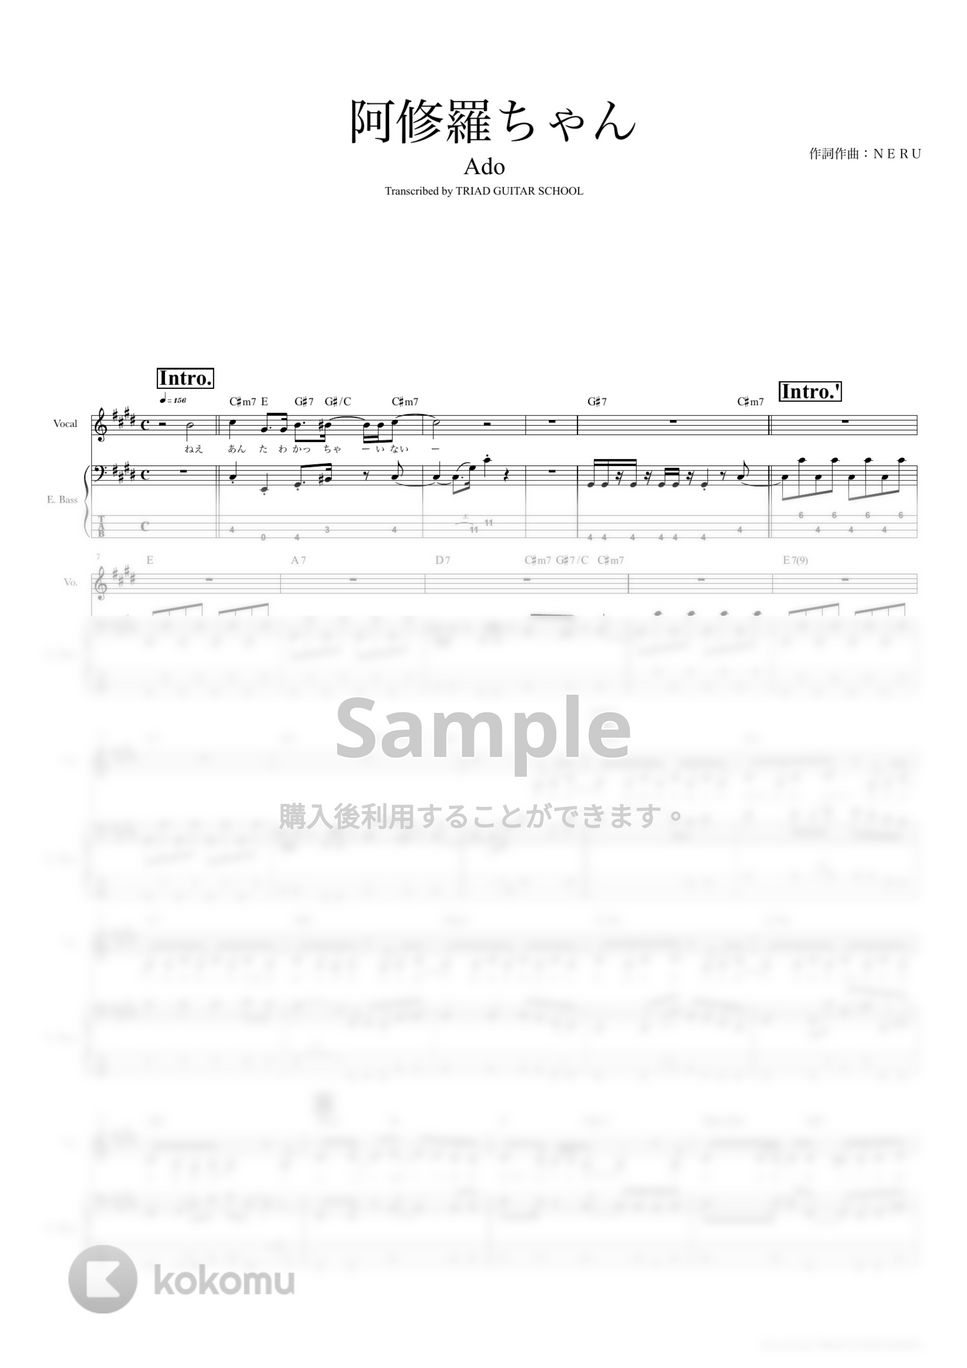 Ado - 阿修羅ちゃん (ベーススコア・歌詞・コード付き) by TRIAD GUITAR SCHOOL